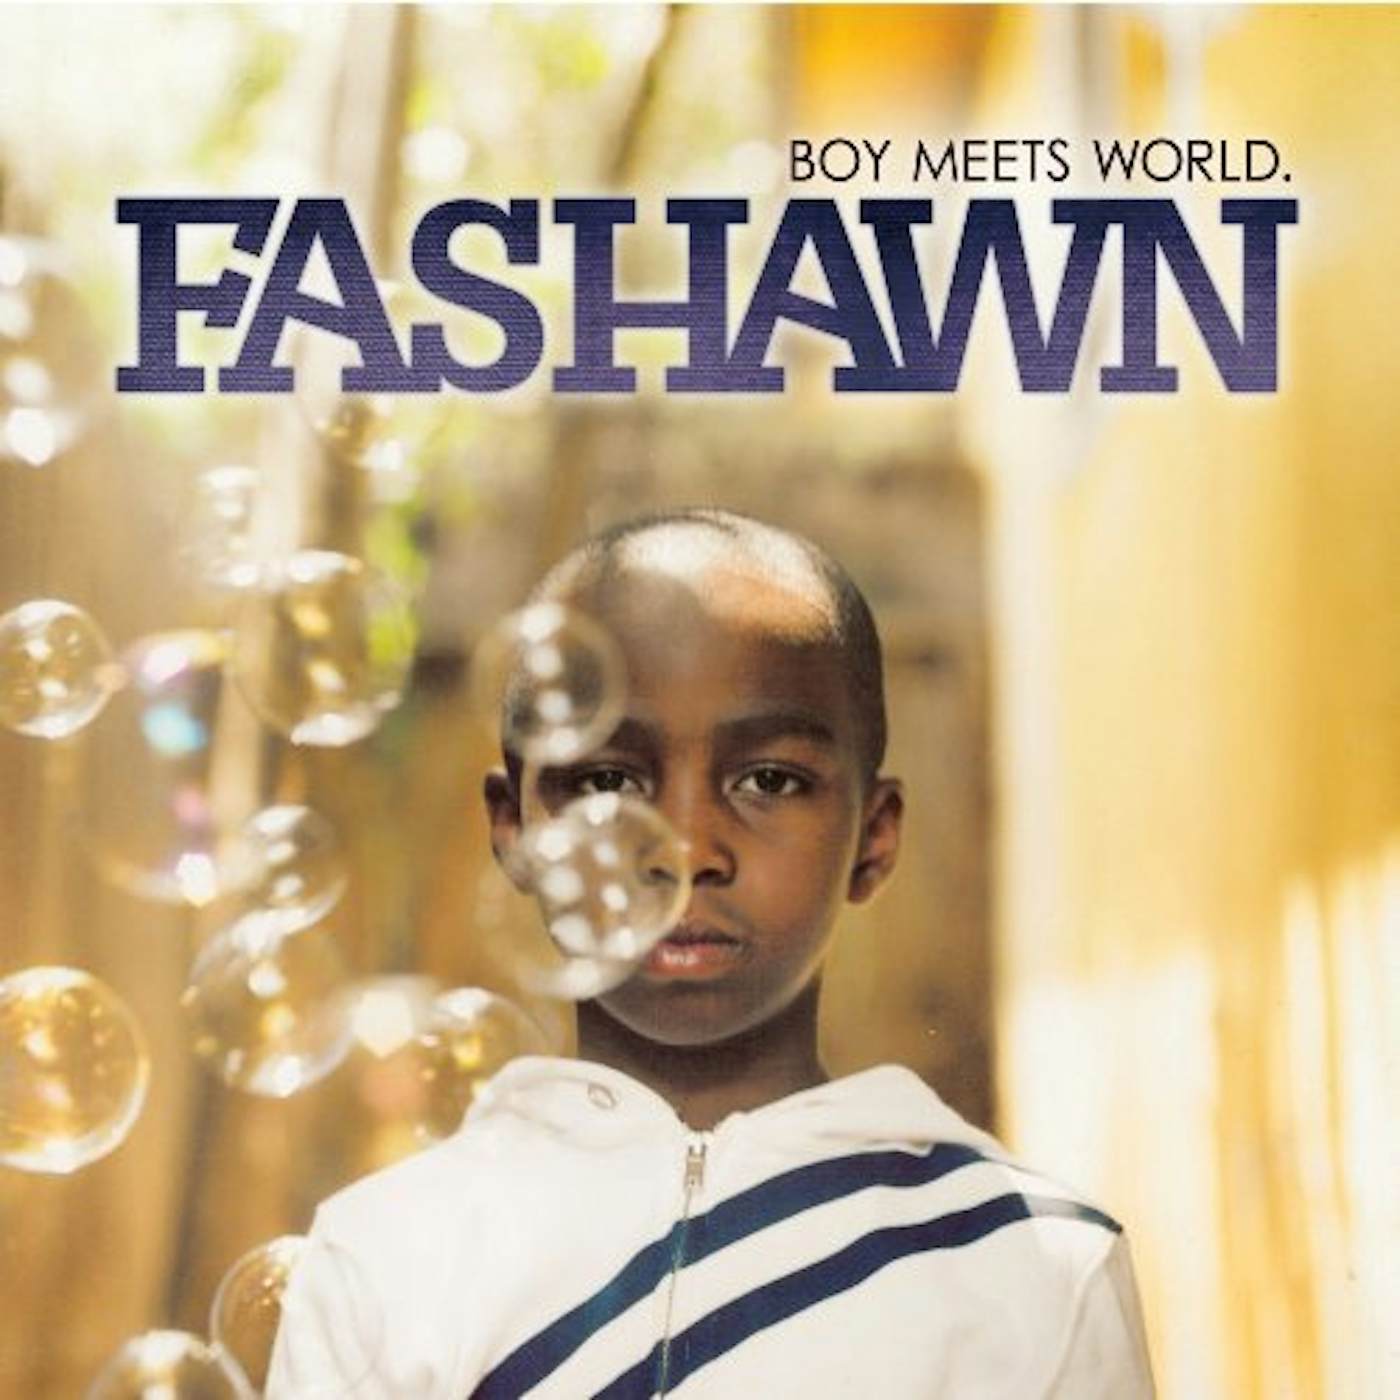 Fashawn BOY MEETS WORLD CD